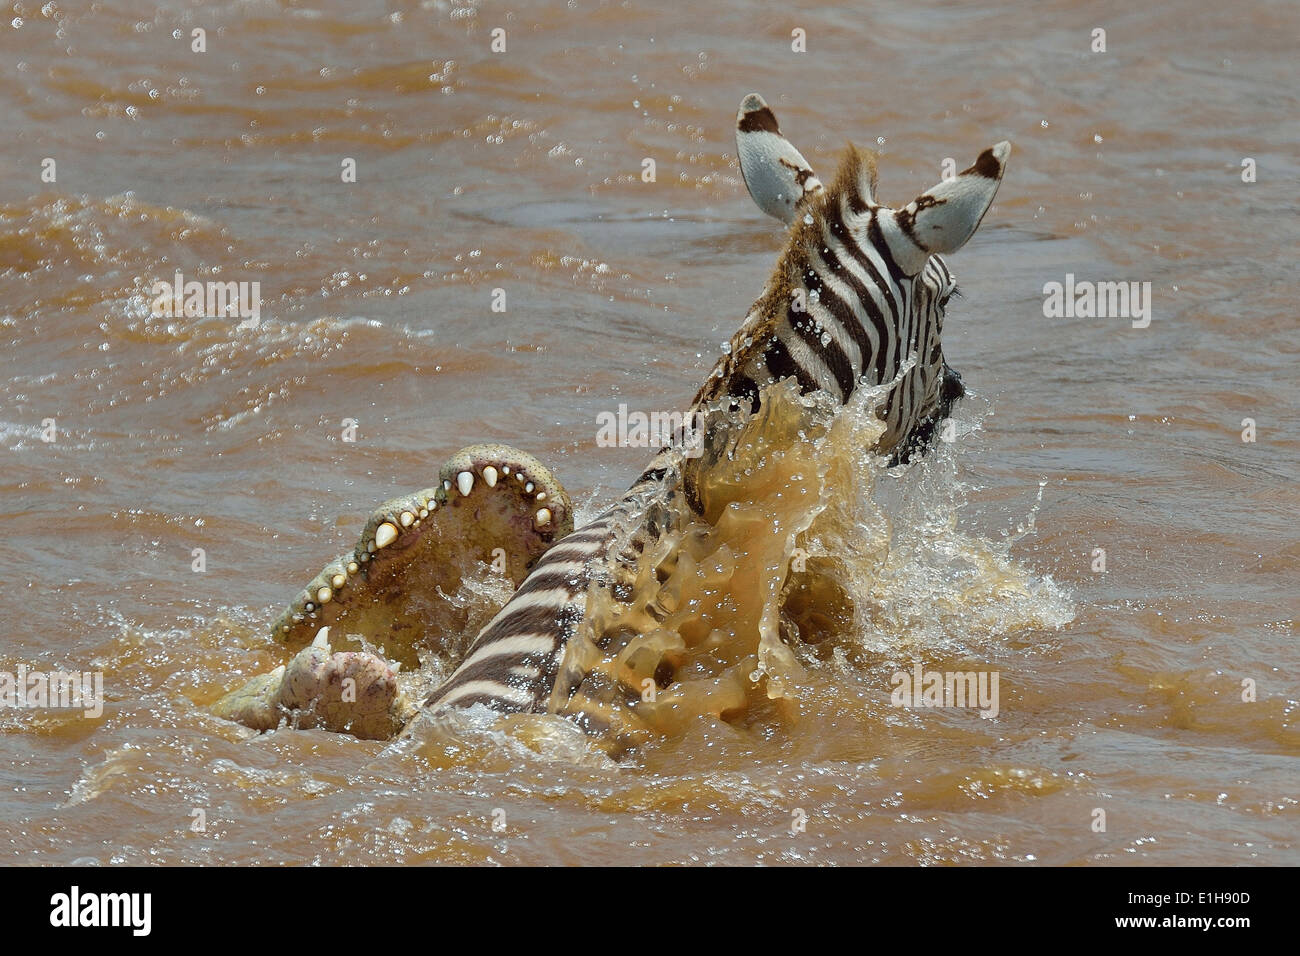 Burchell's Zebra in the jaws of a Nile Crocodile in river Stock Photo